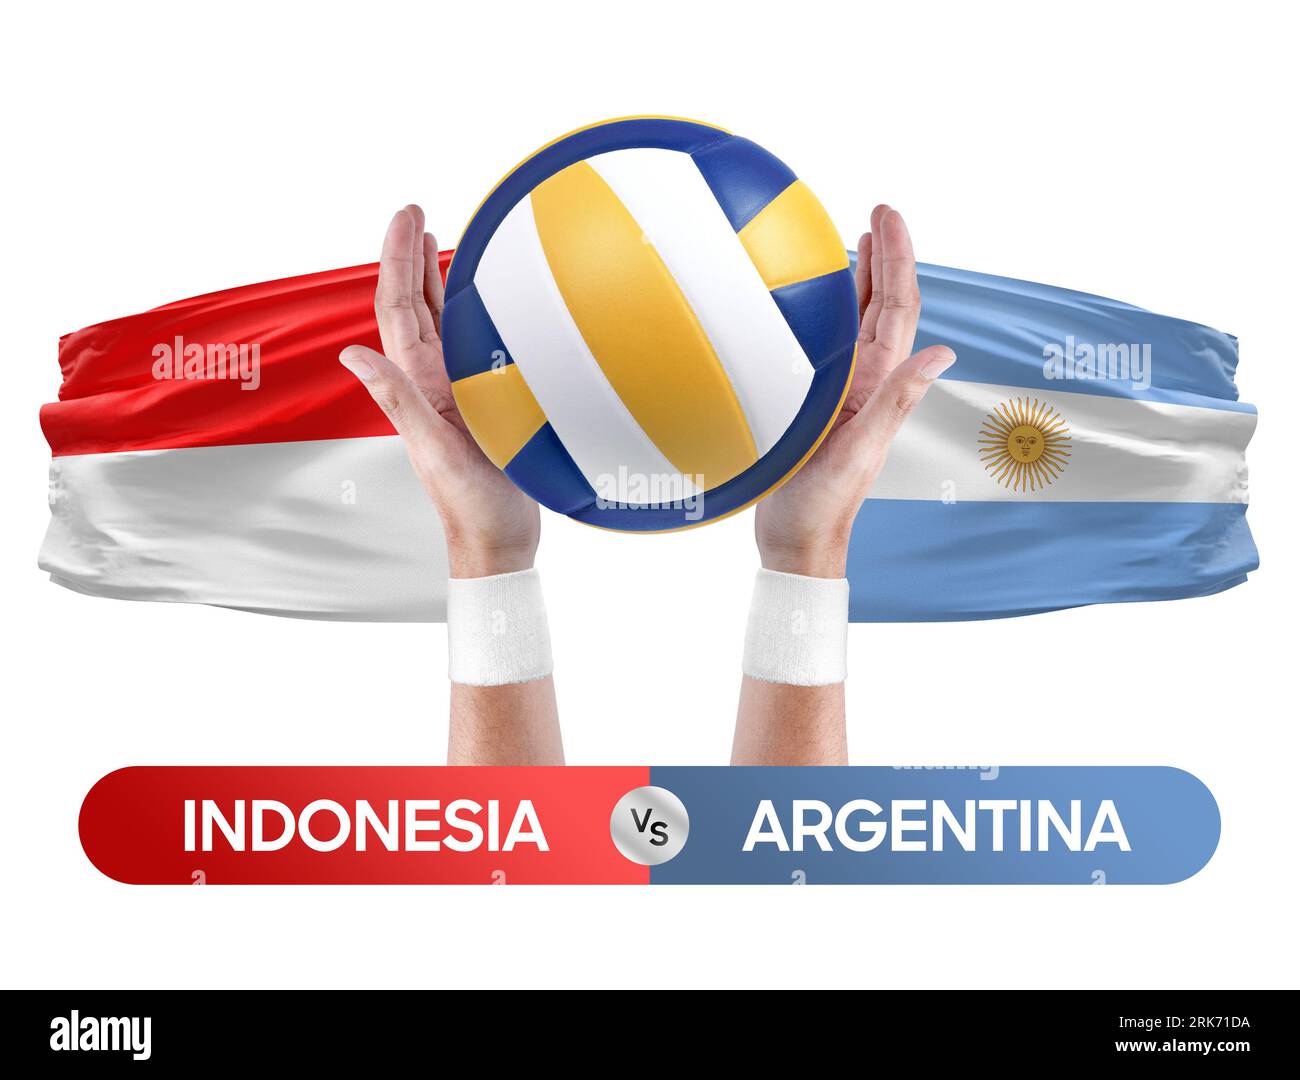 Indonesien gegen Argentinien Nationalmannschaften Volleyball Volleyball Volleyball Match Competition Concept. Stockfoto